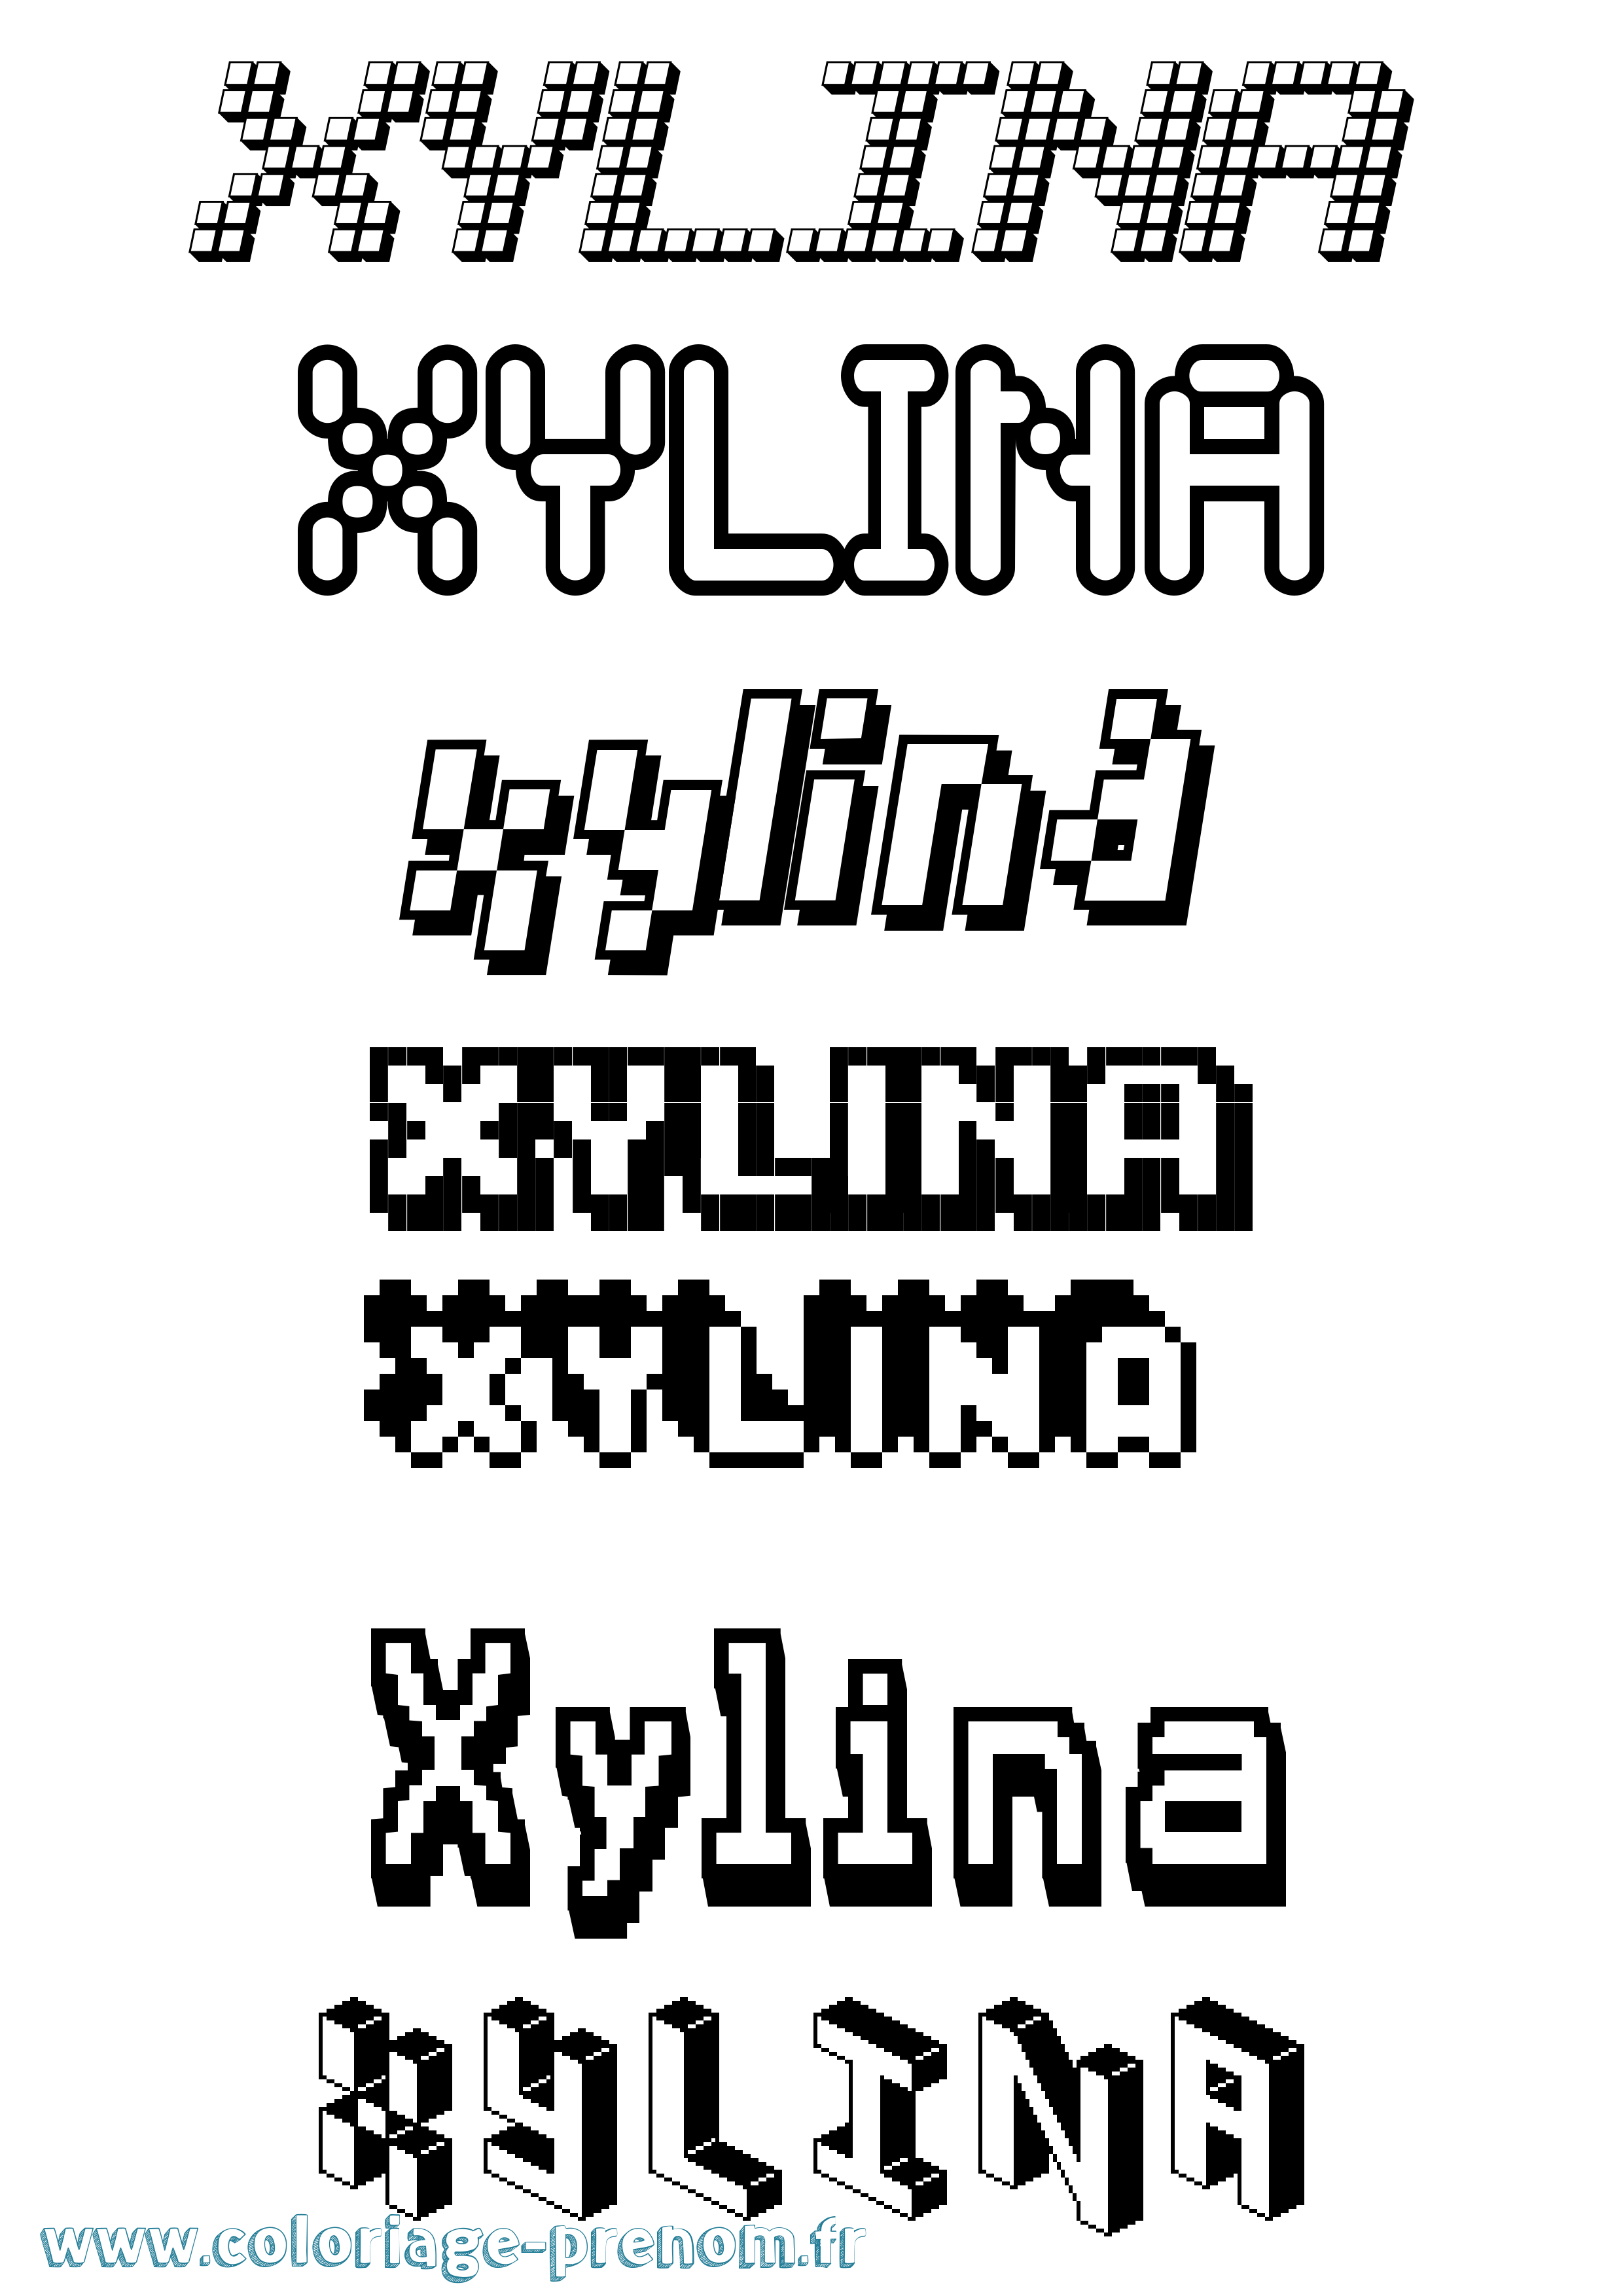 Coloriage prénom Xylina Pixel